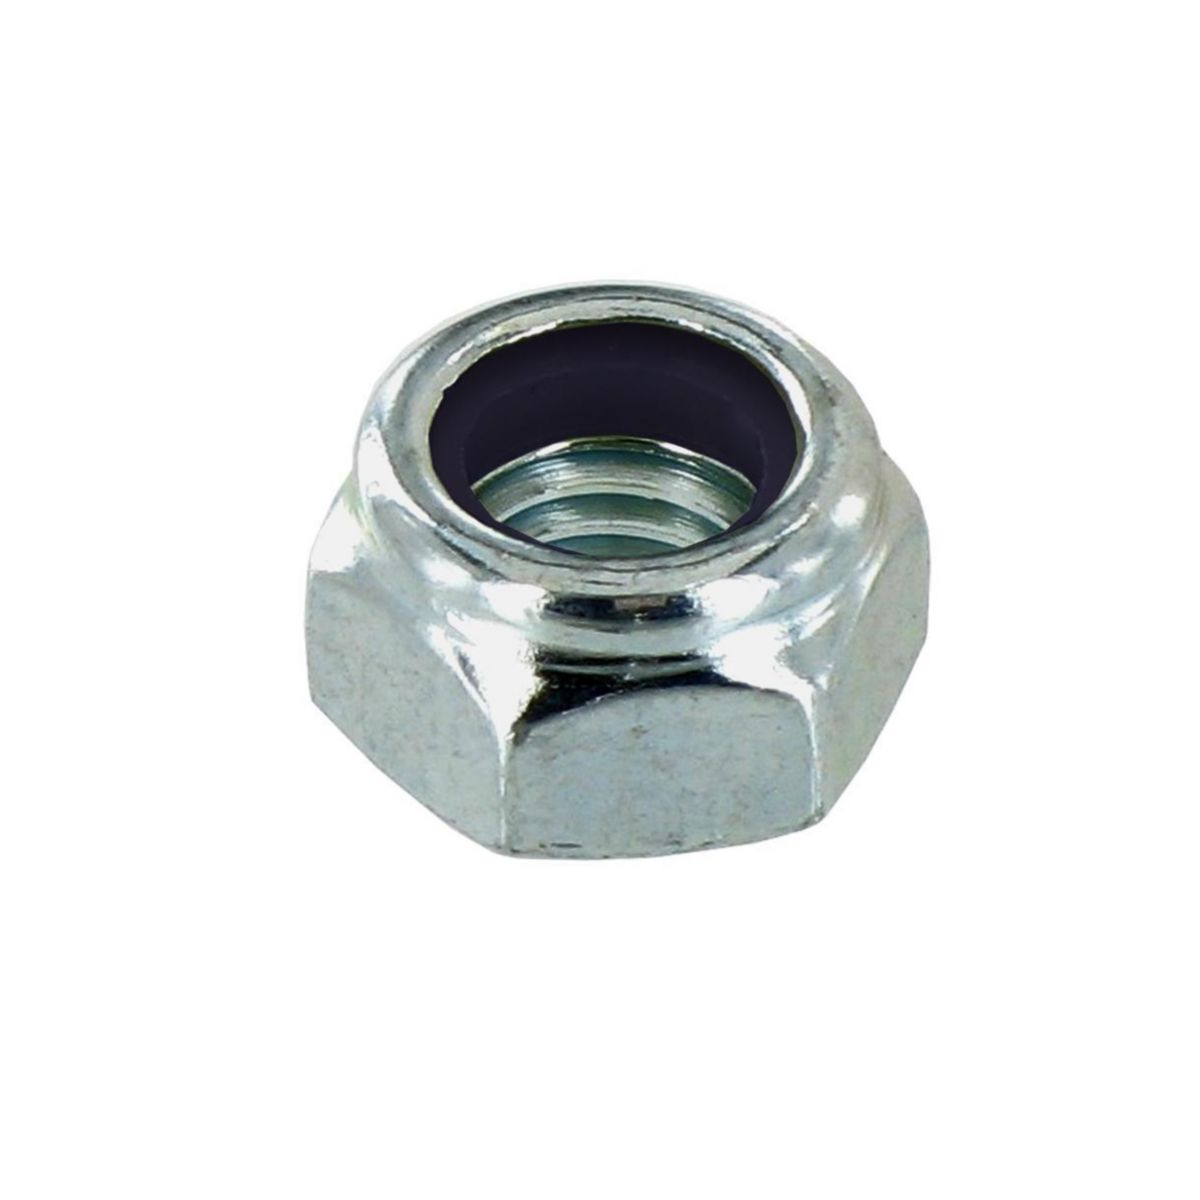 Self-locking nut 12 mm AZI, 6 pieces.